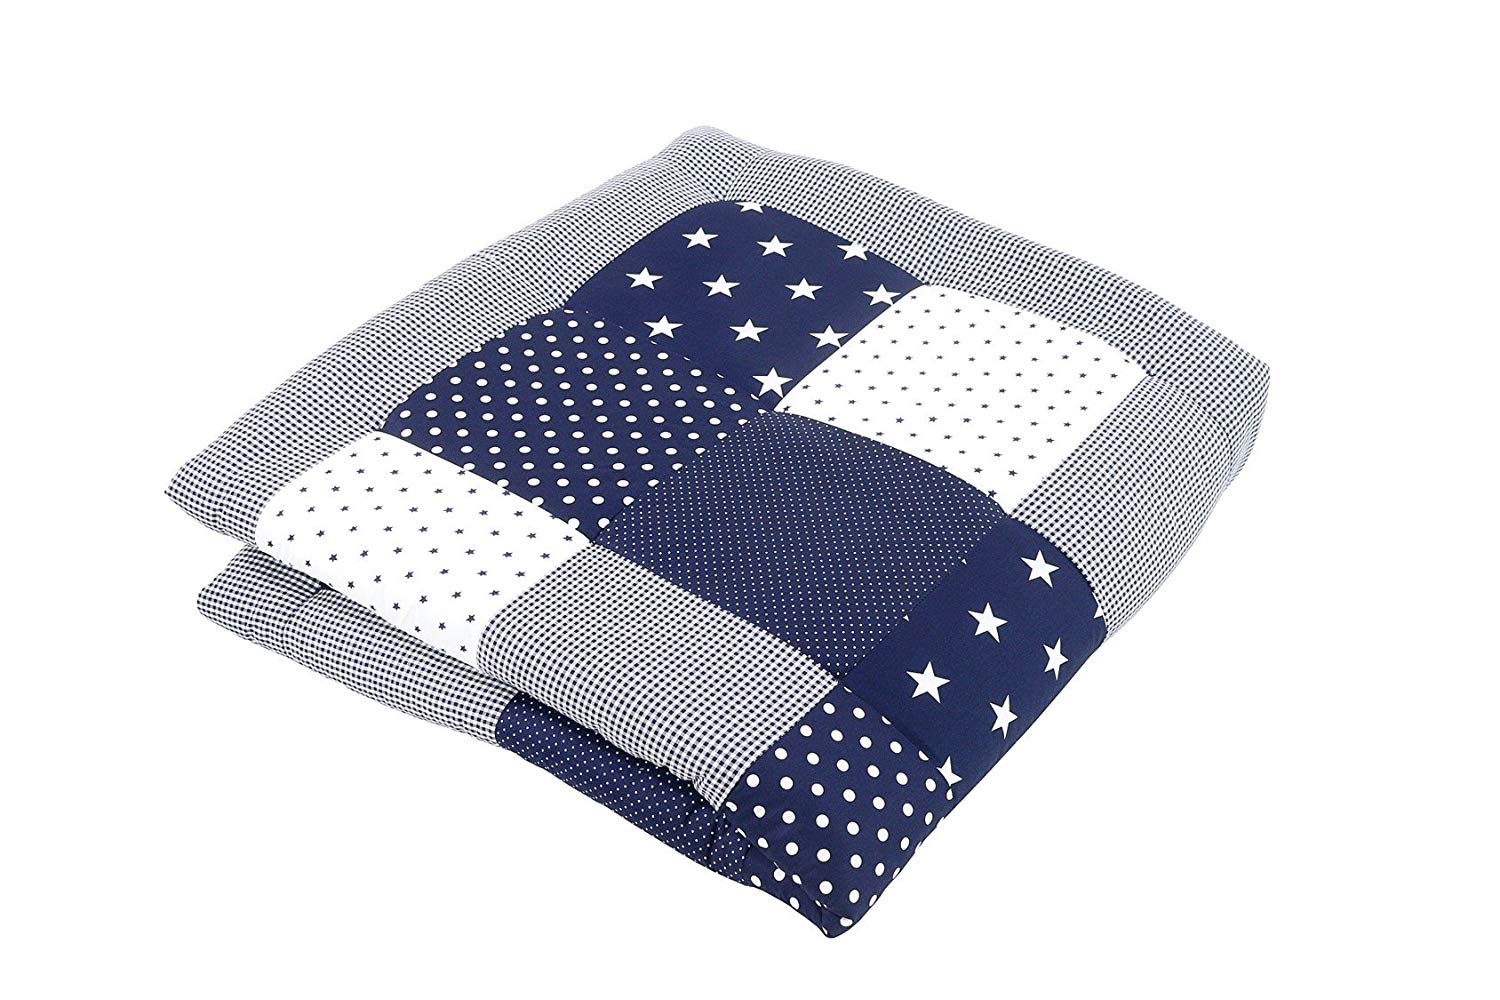 Bebi TRIOLINO Crawling Blanket with Play Mat & Playpen Liner 100x100 cm 120 x 120 cm 140x140 Large Soft Padding Blue Stars 120 x 120 cm blue, white